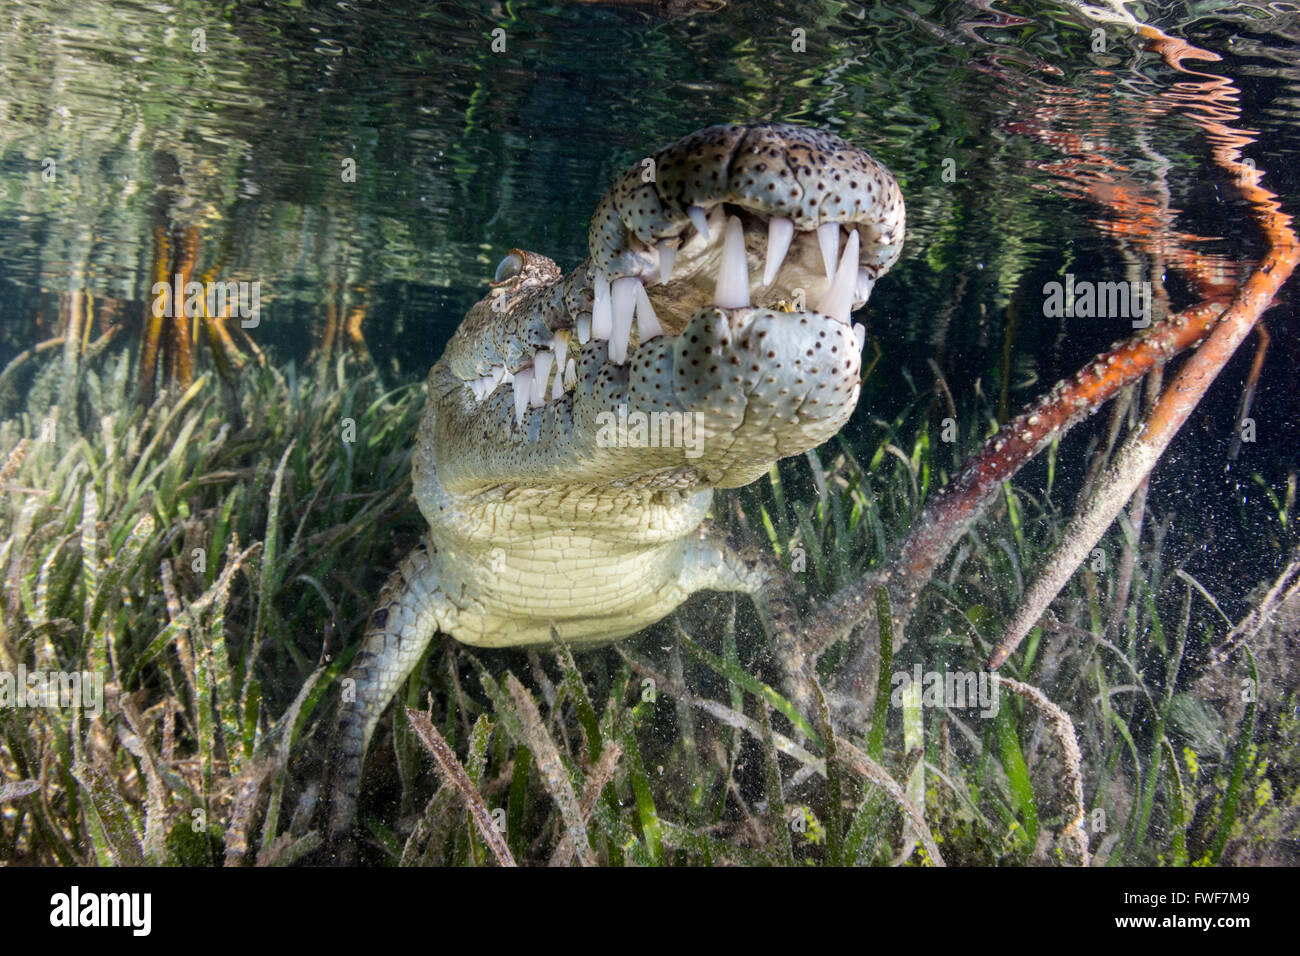 saltwater crocodile, Crocodylus porosus, Jardines de la Reina, Cuba, Caribbean Sea Stock Photo